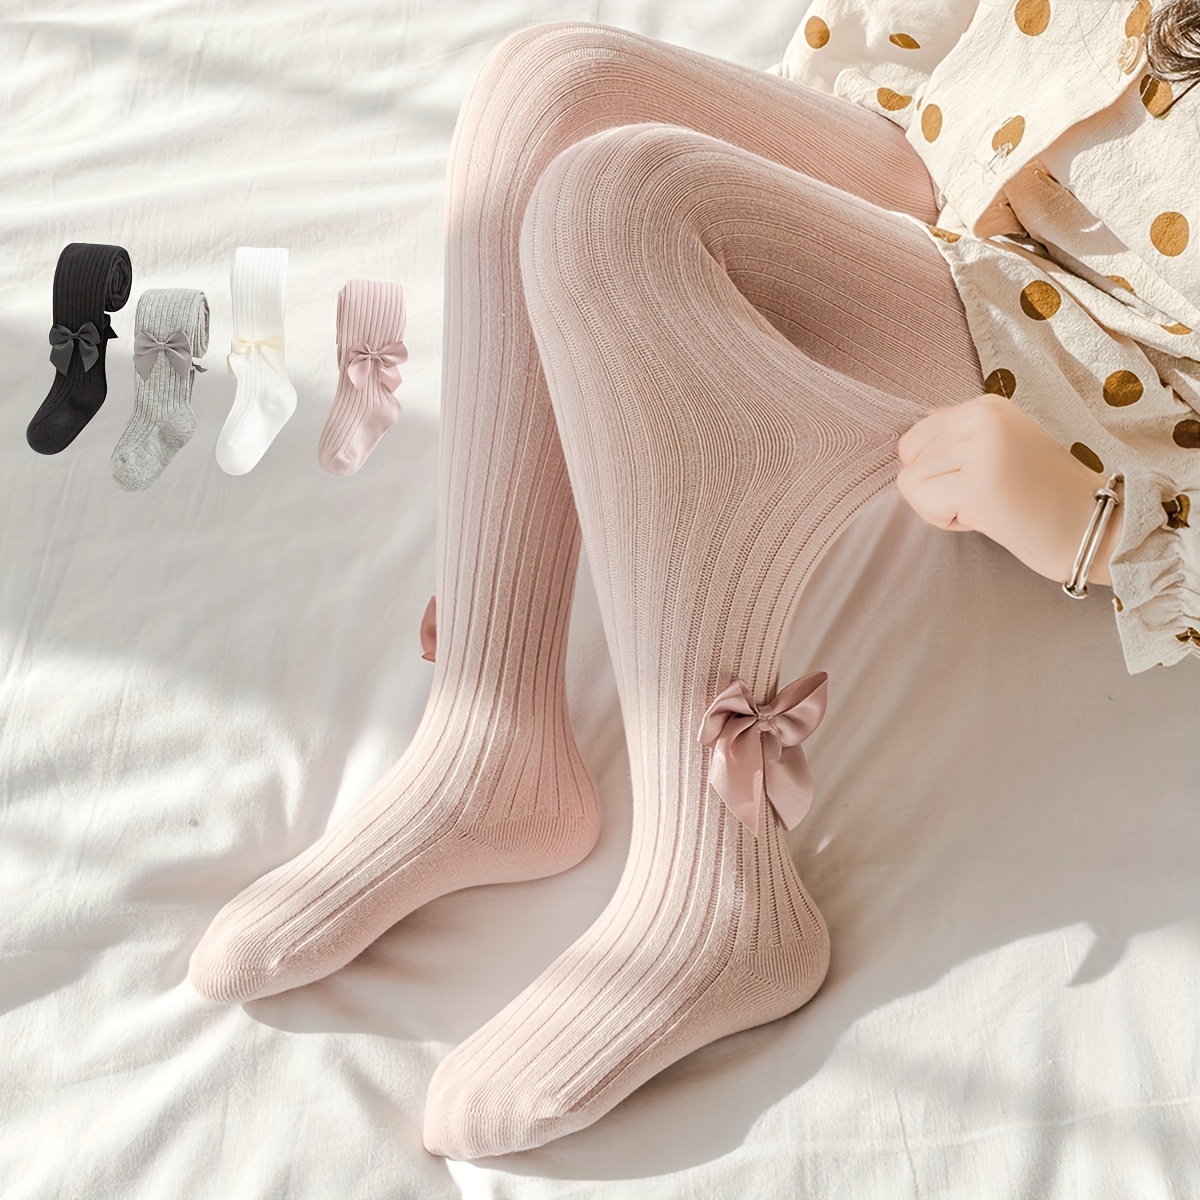 1pc Girls' White Close-fitting Dance Socks, Thin Pantyhose Tights